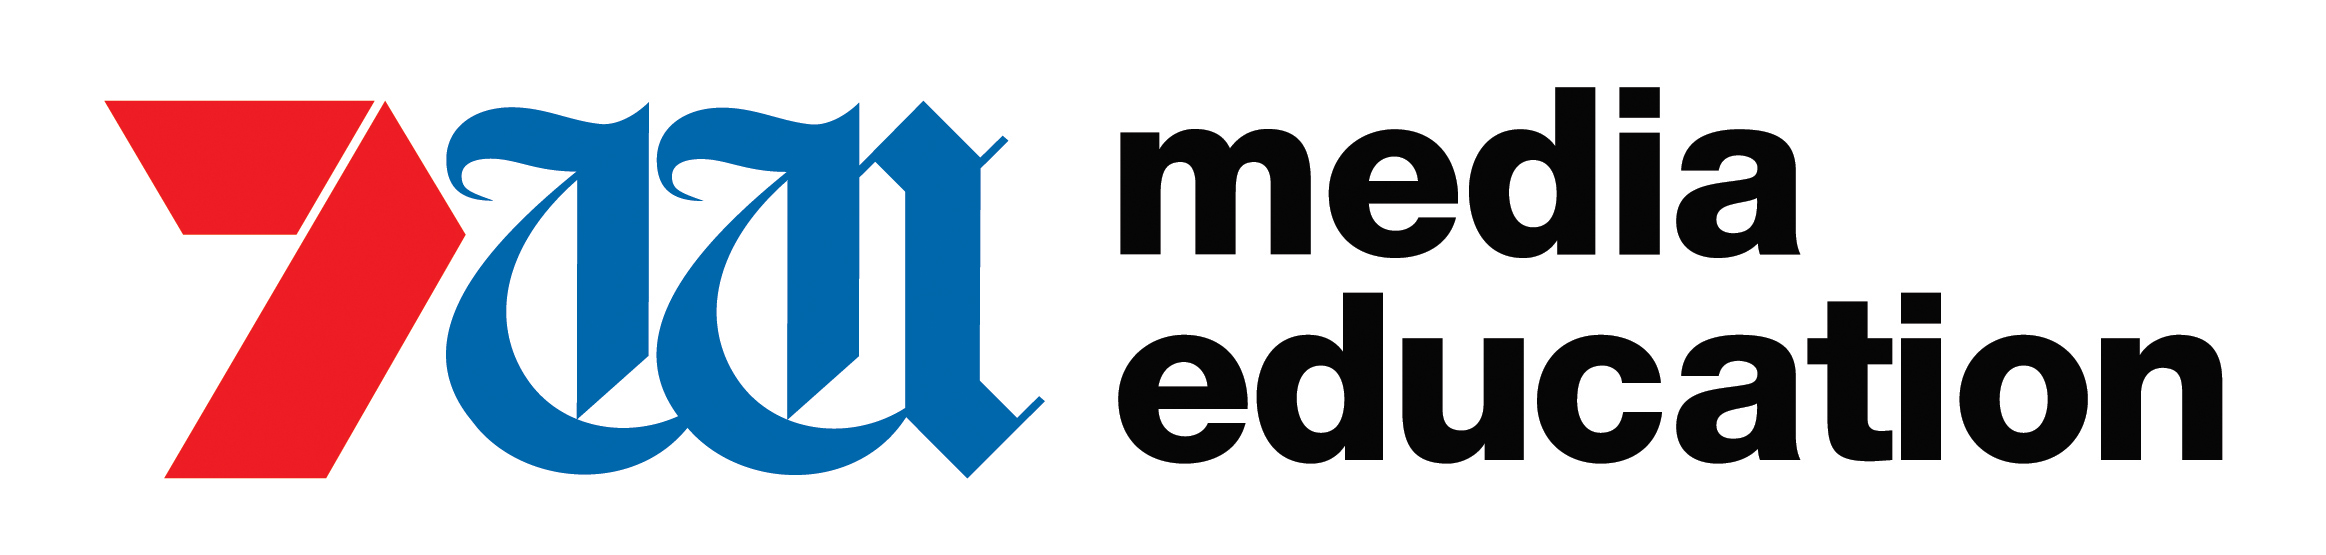 Seven West Media Logo